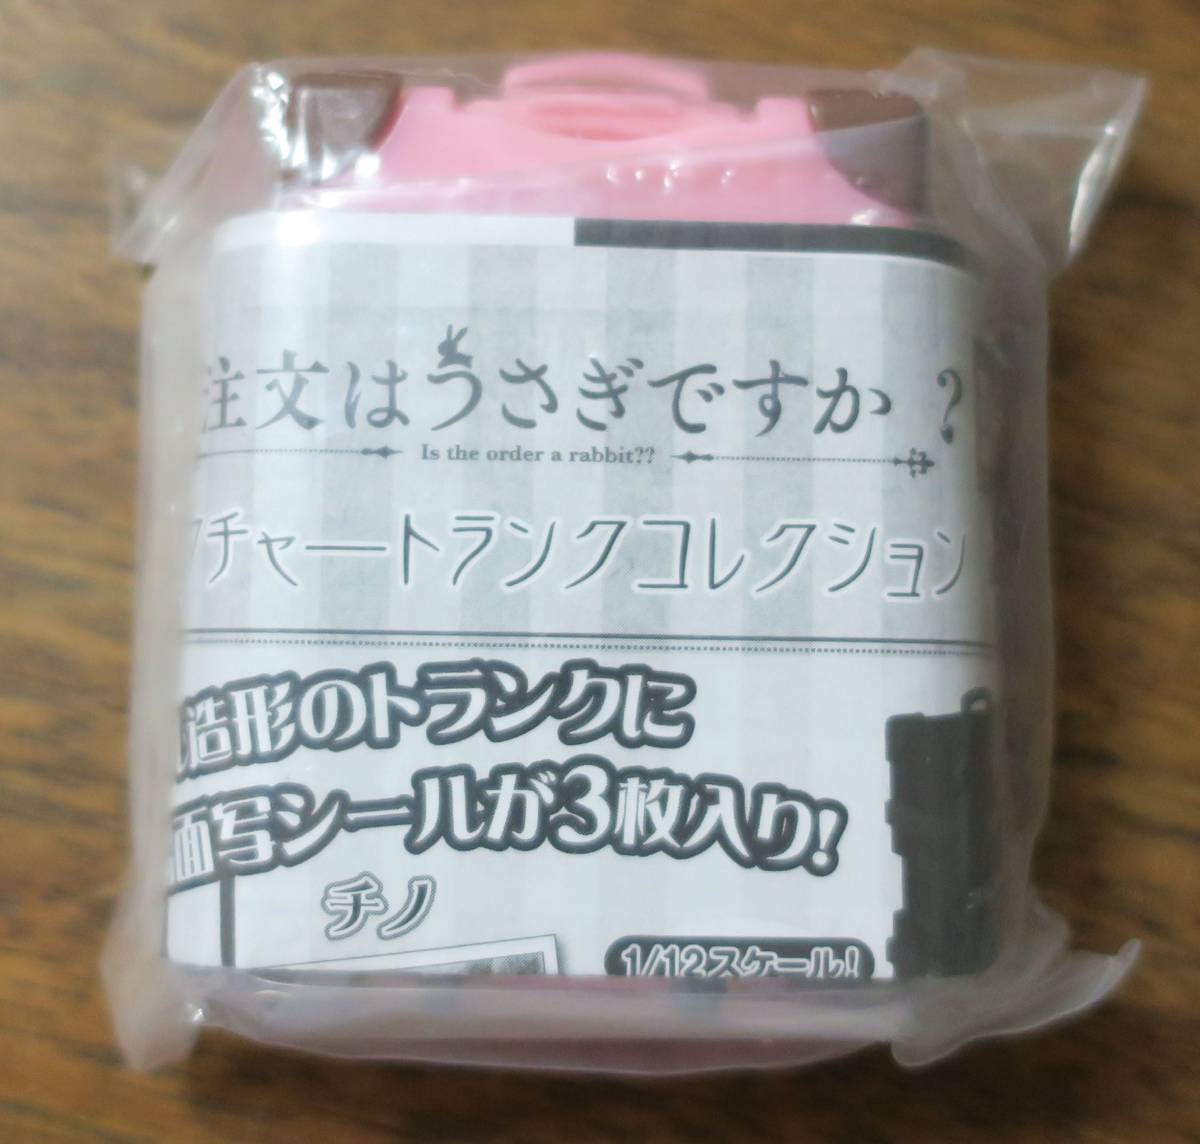  order is ...? 1/12 Picture trunk collection bag cocoa guarantee . heart love [ search ]ga tea CV Sakura . sound trunk Is the order a rabbit suitcase Koi seal 